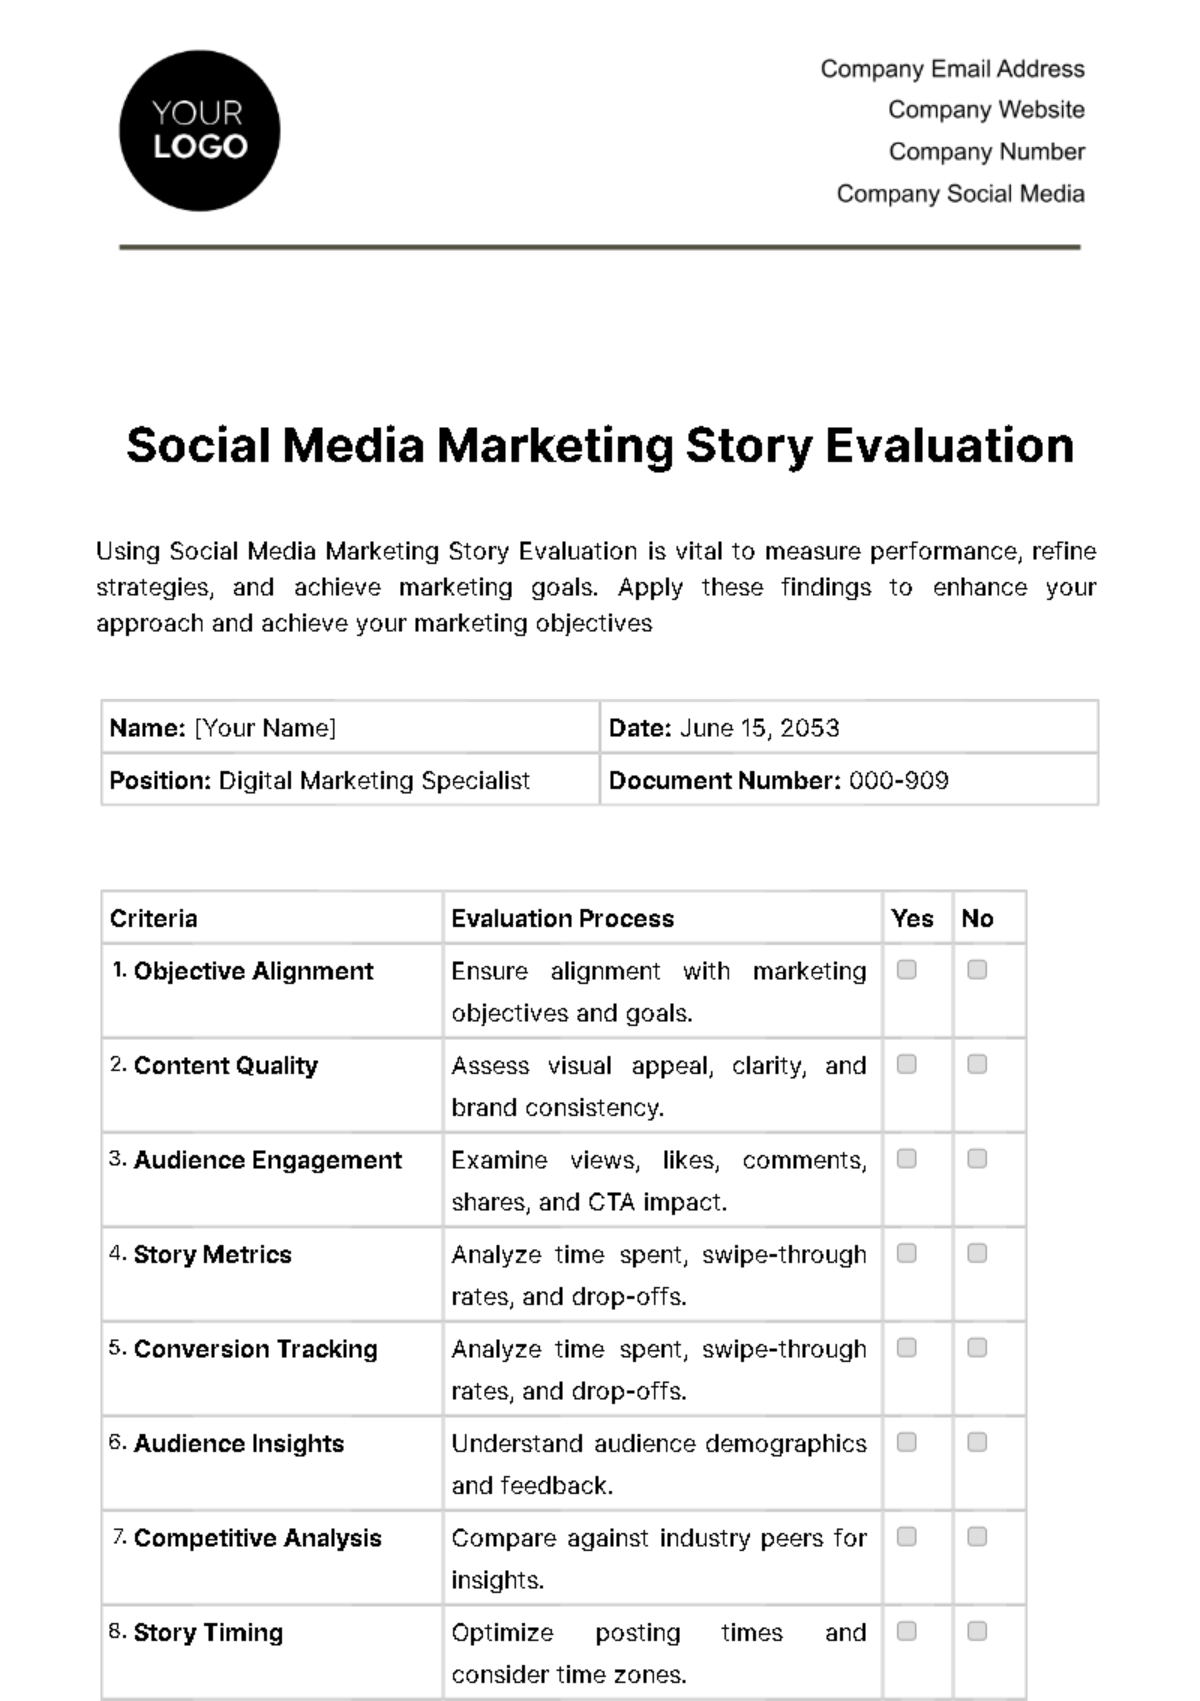 Social Media Marketing Story Evaluation Template